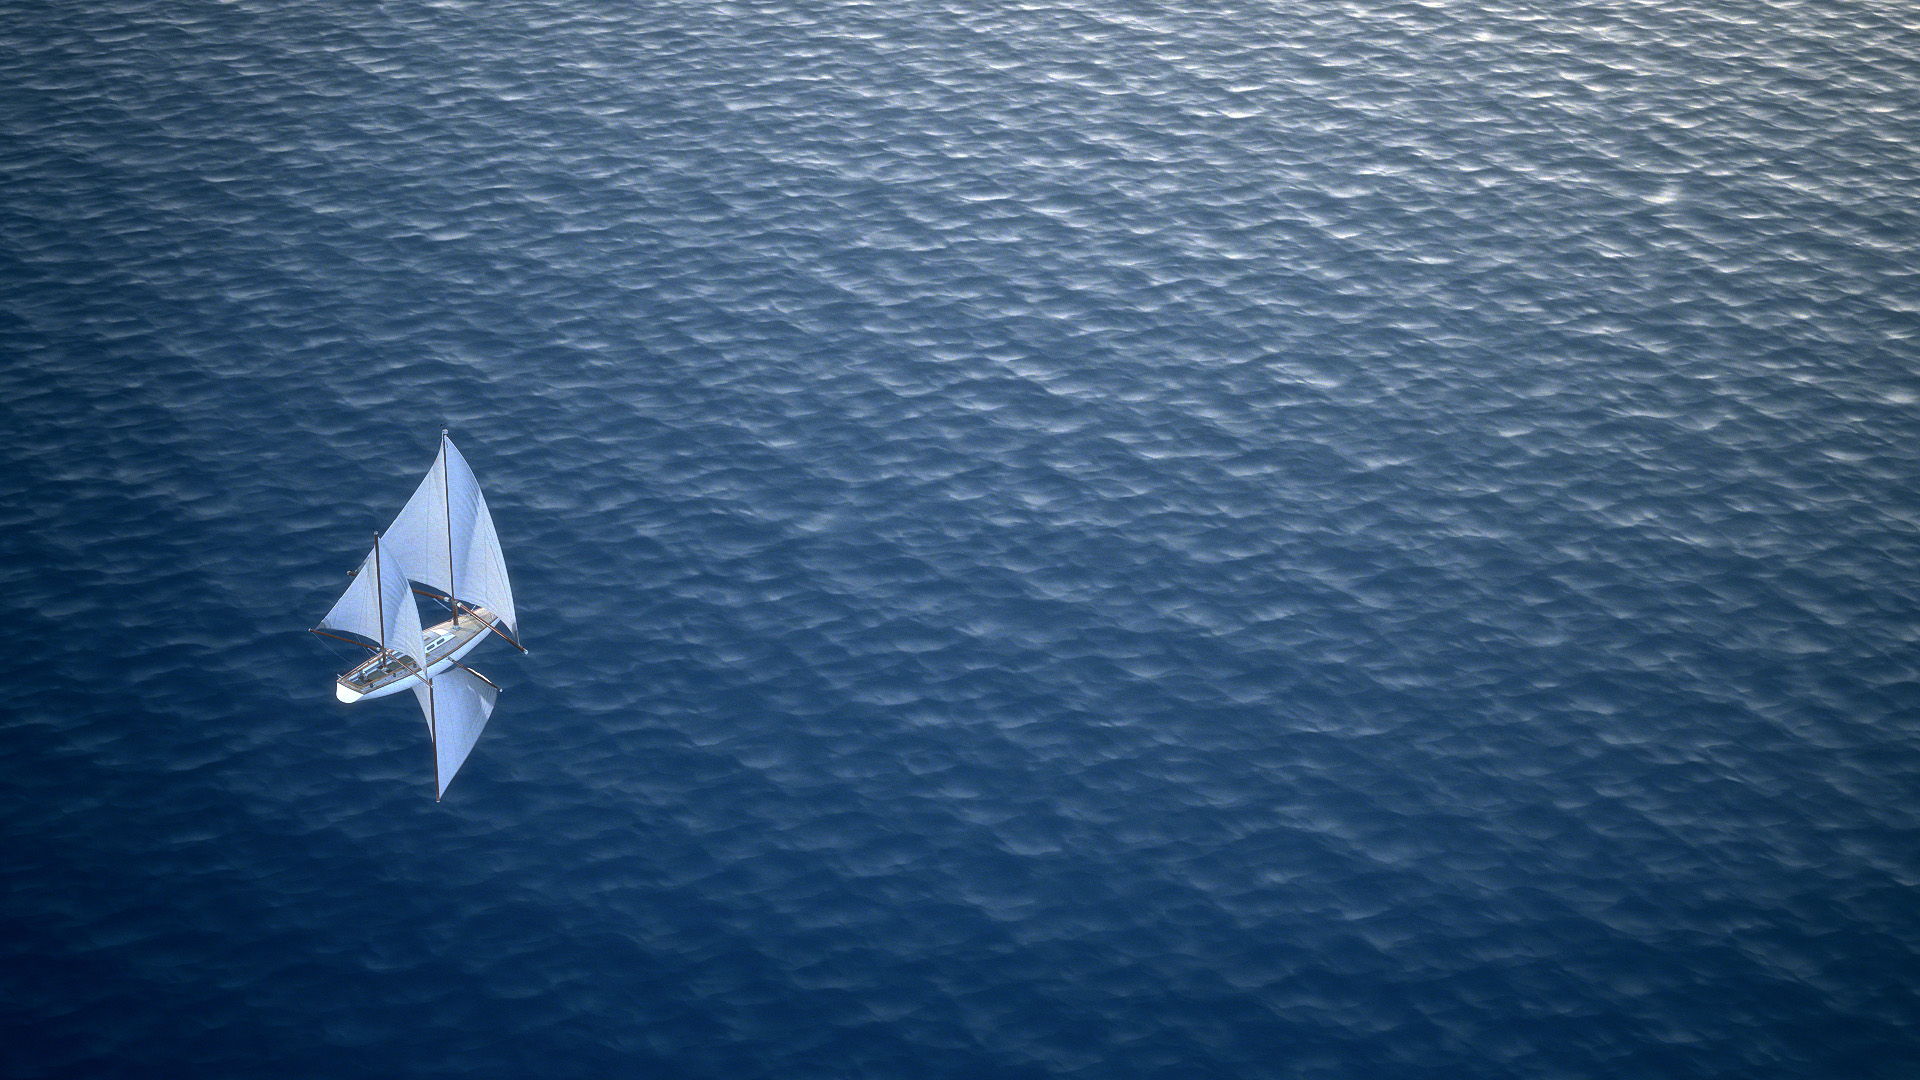 A CG short film by Jennie Corke showing a treacherous journey of an airship above an ocean.